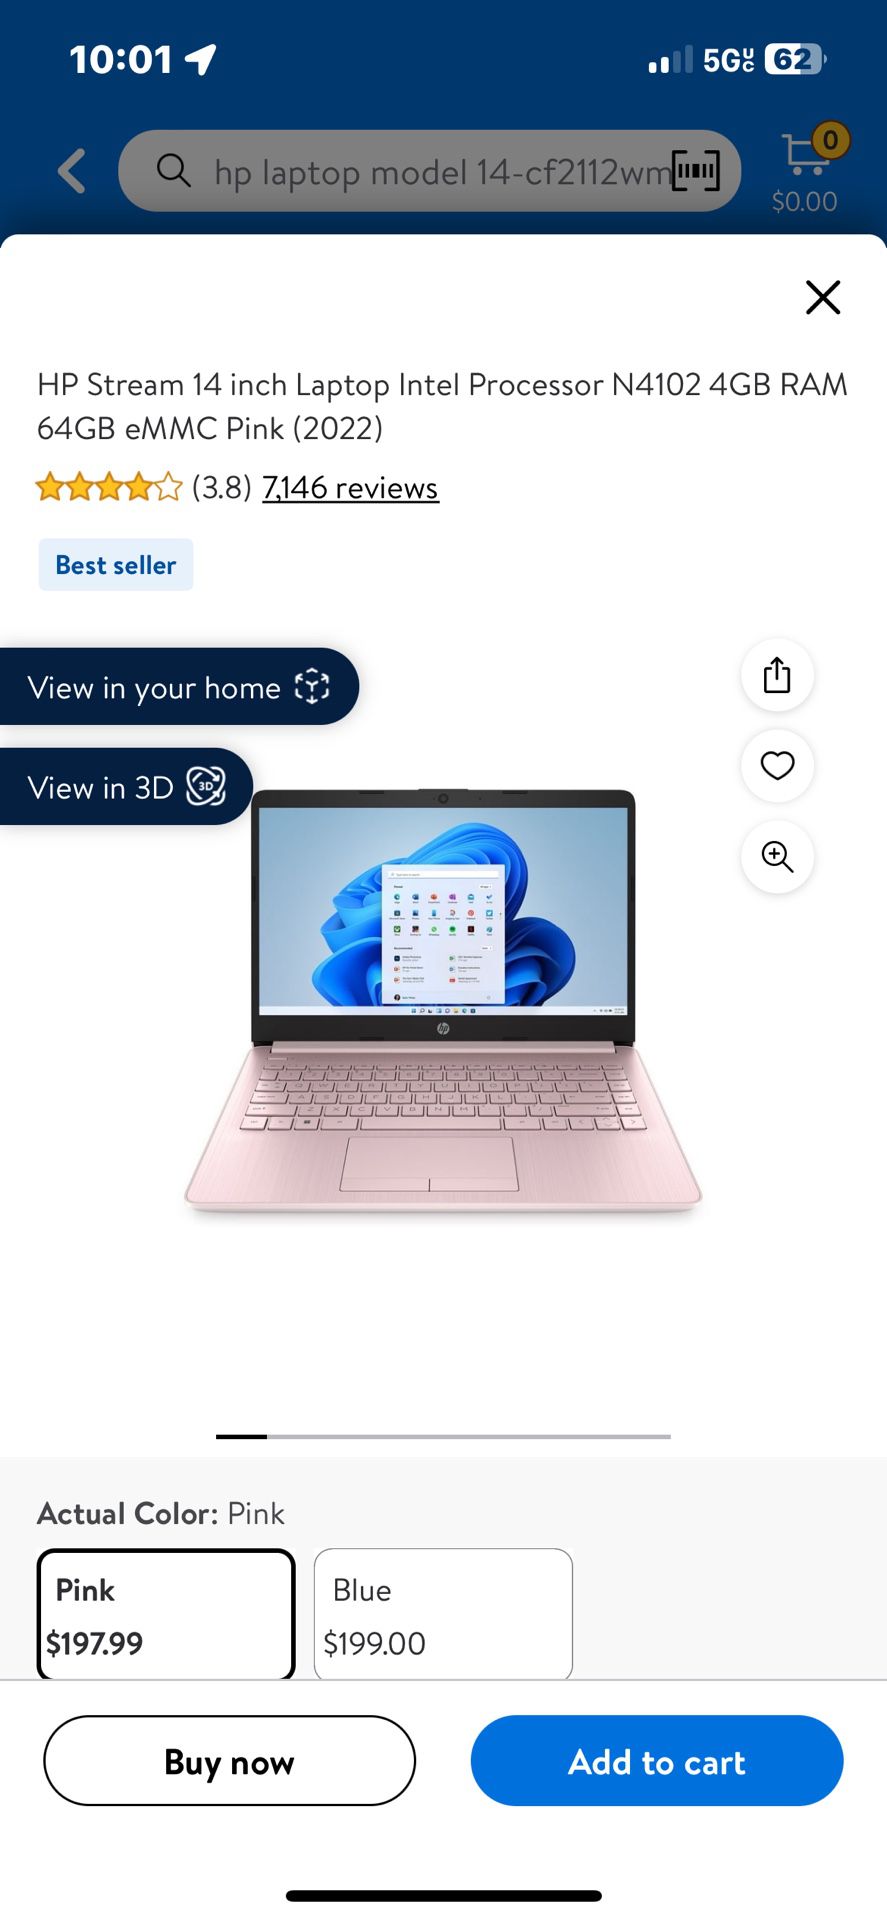 HP laptop model 14 rose gold 